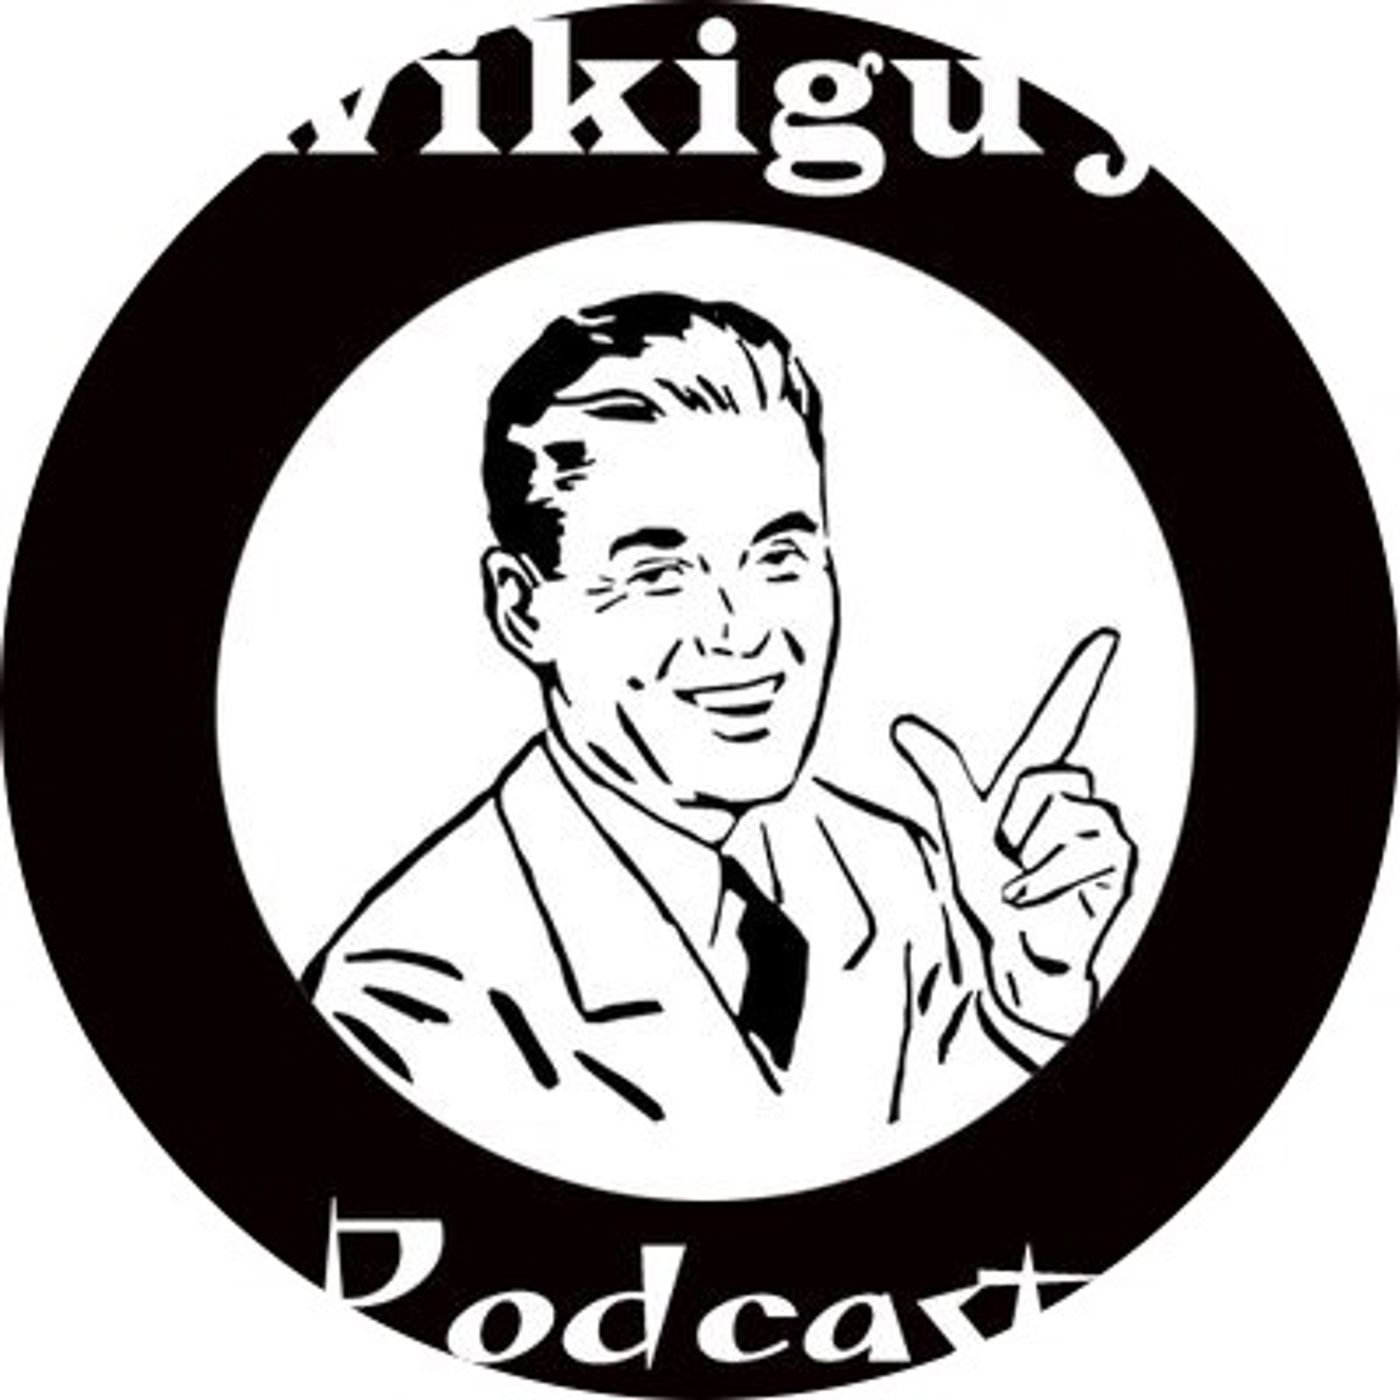 Wikiguy Podcast's show